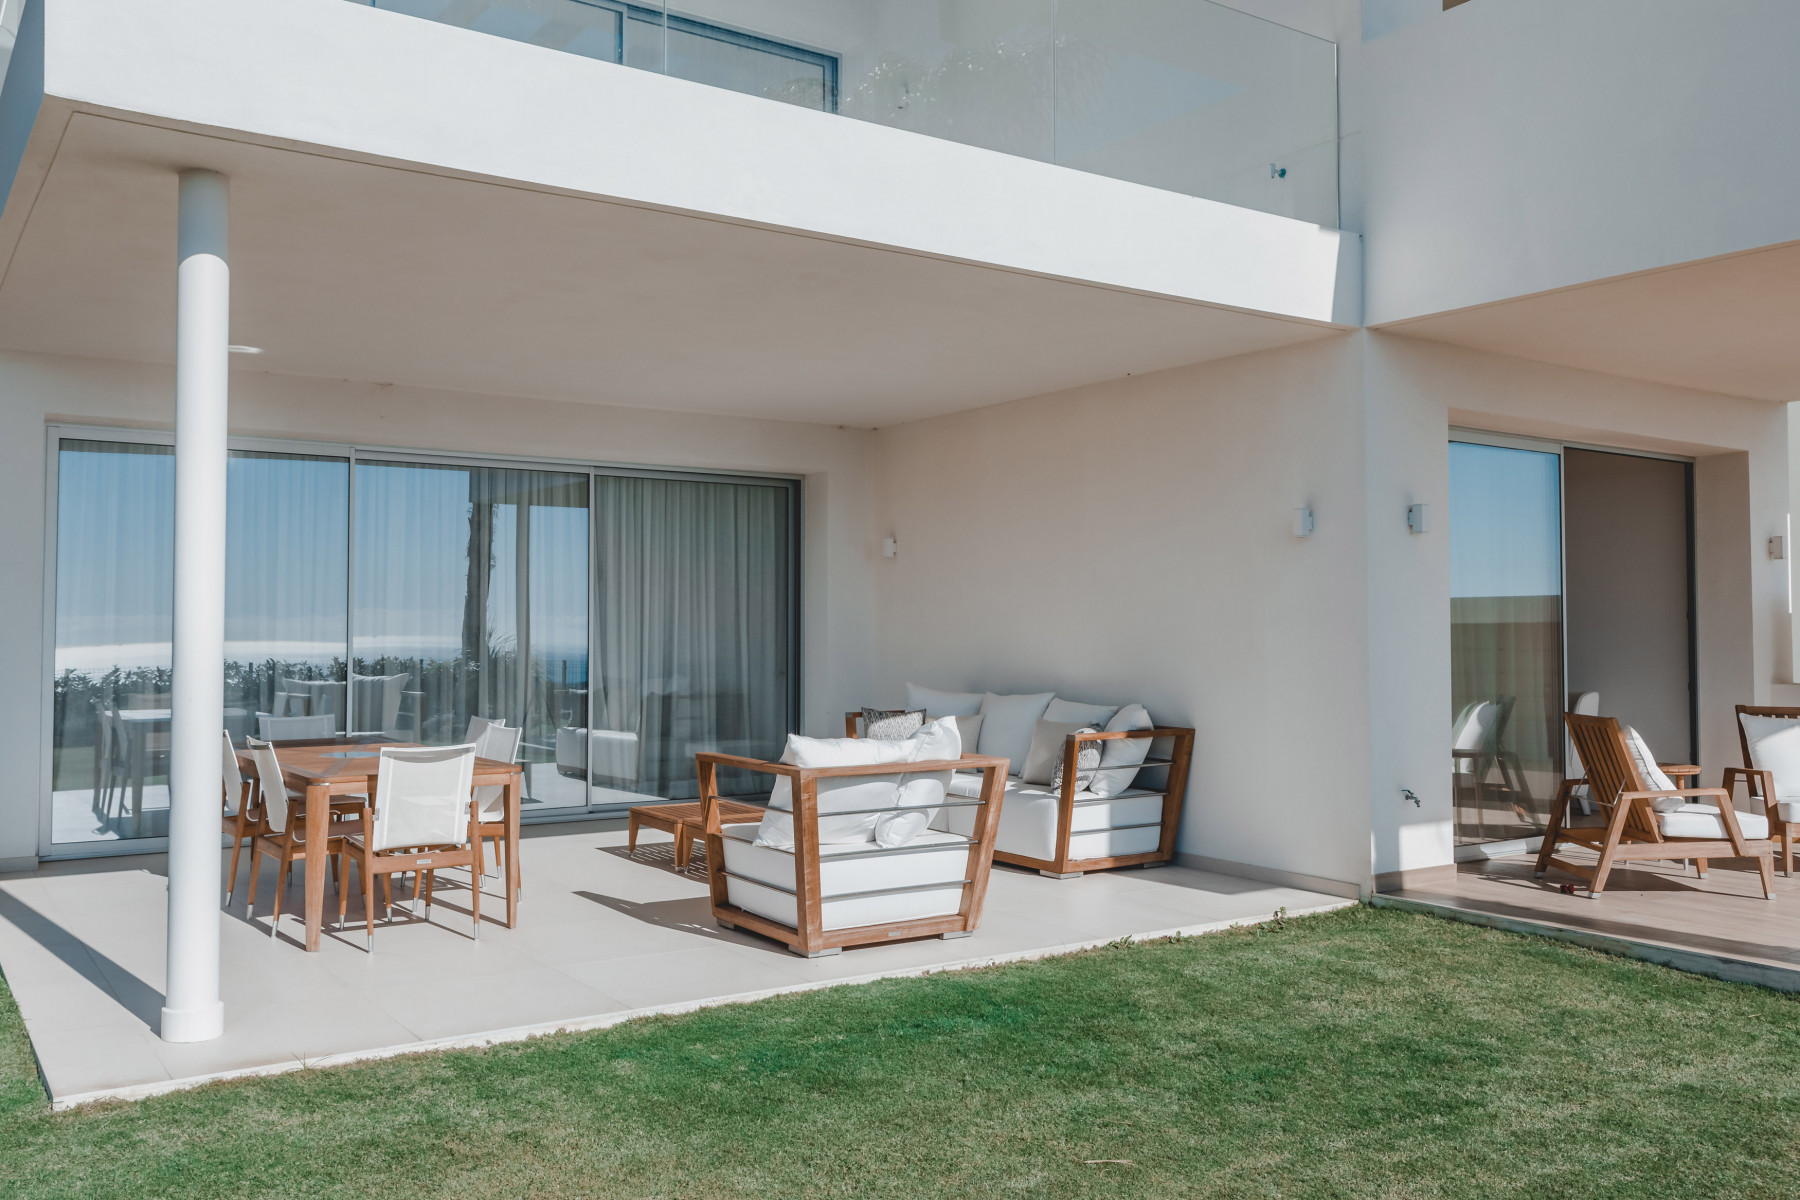 New duplex three bedroom garden apartment in Marbella West